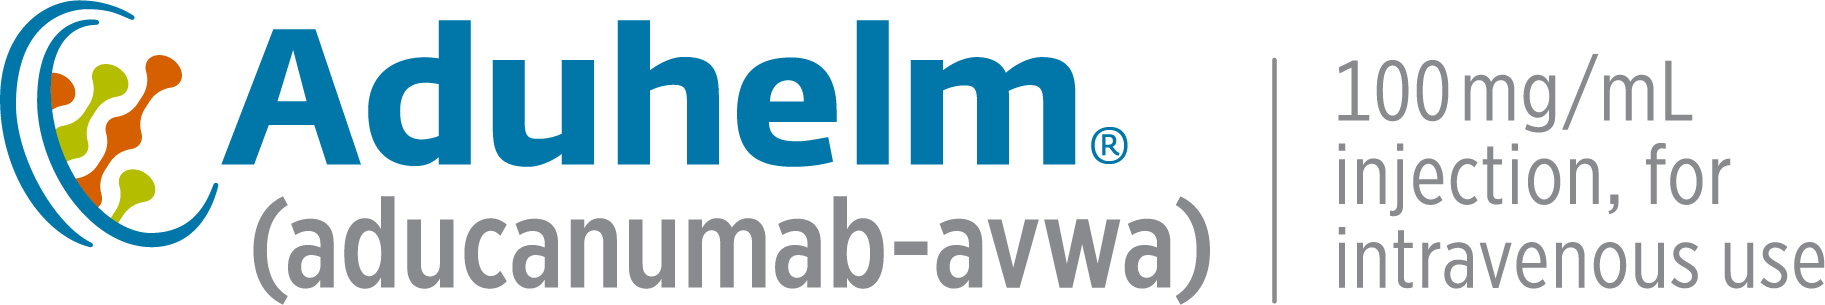 Logo for ADUHELM® (aducanumab-avwa)